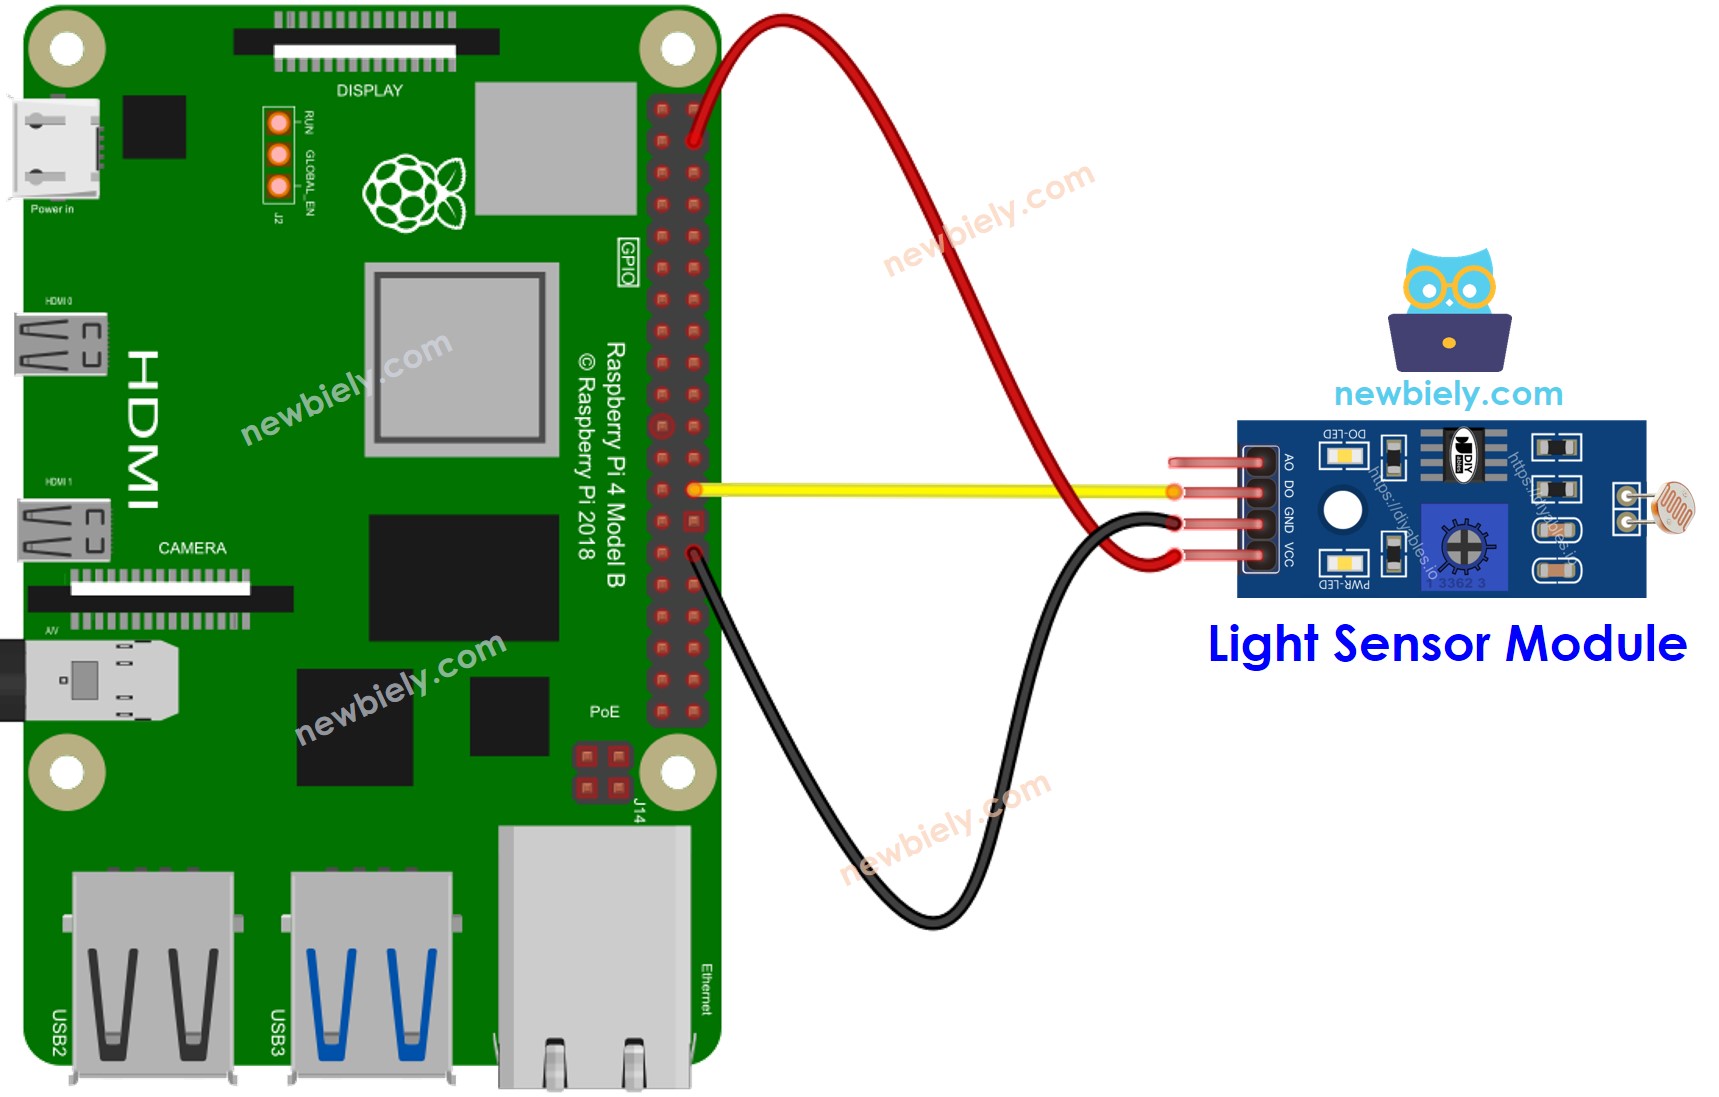 The wiring diagram between Raspberry Pi and LDR Light Sensor Module